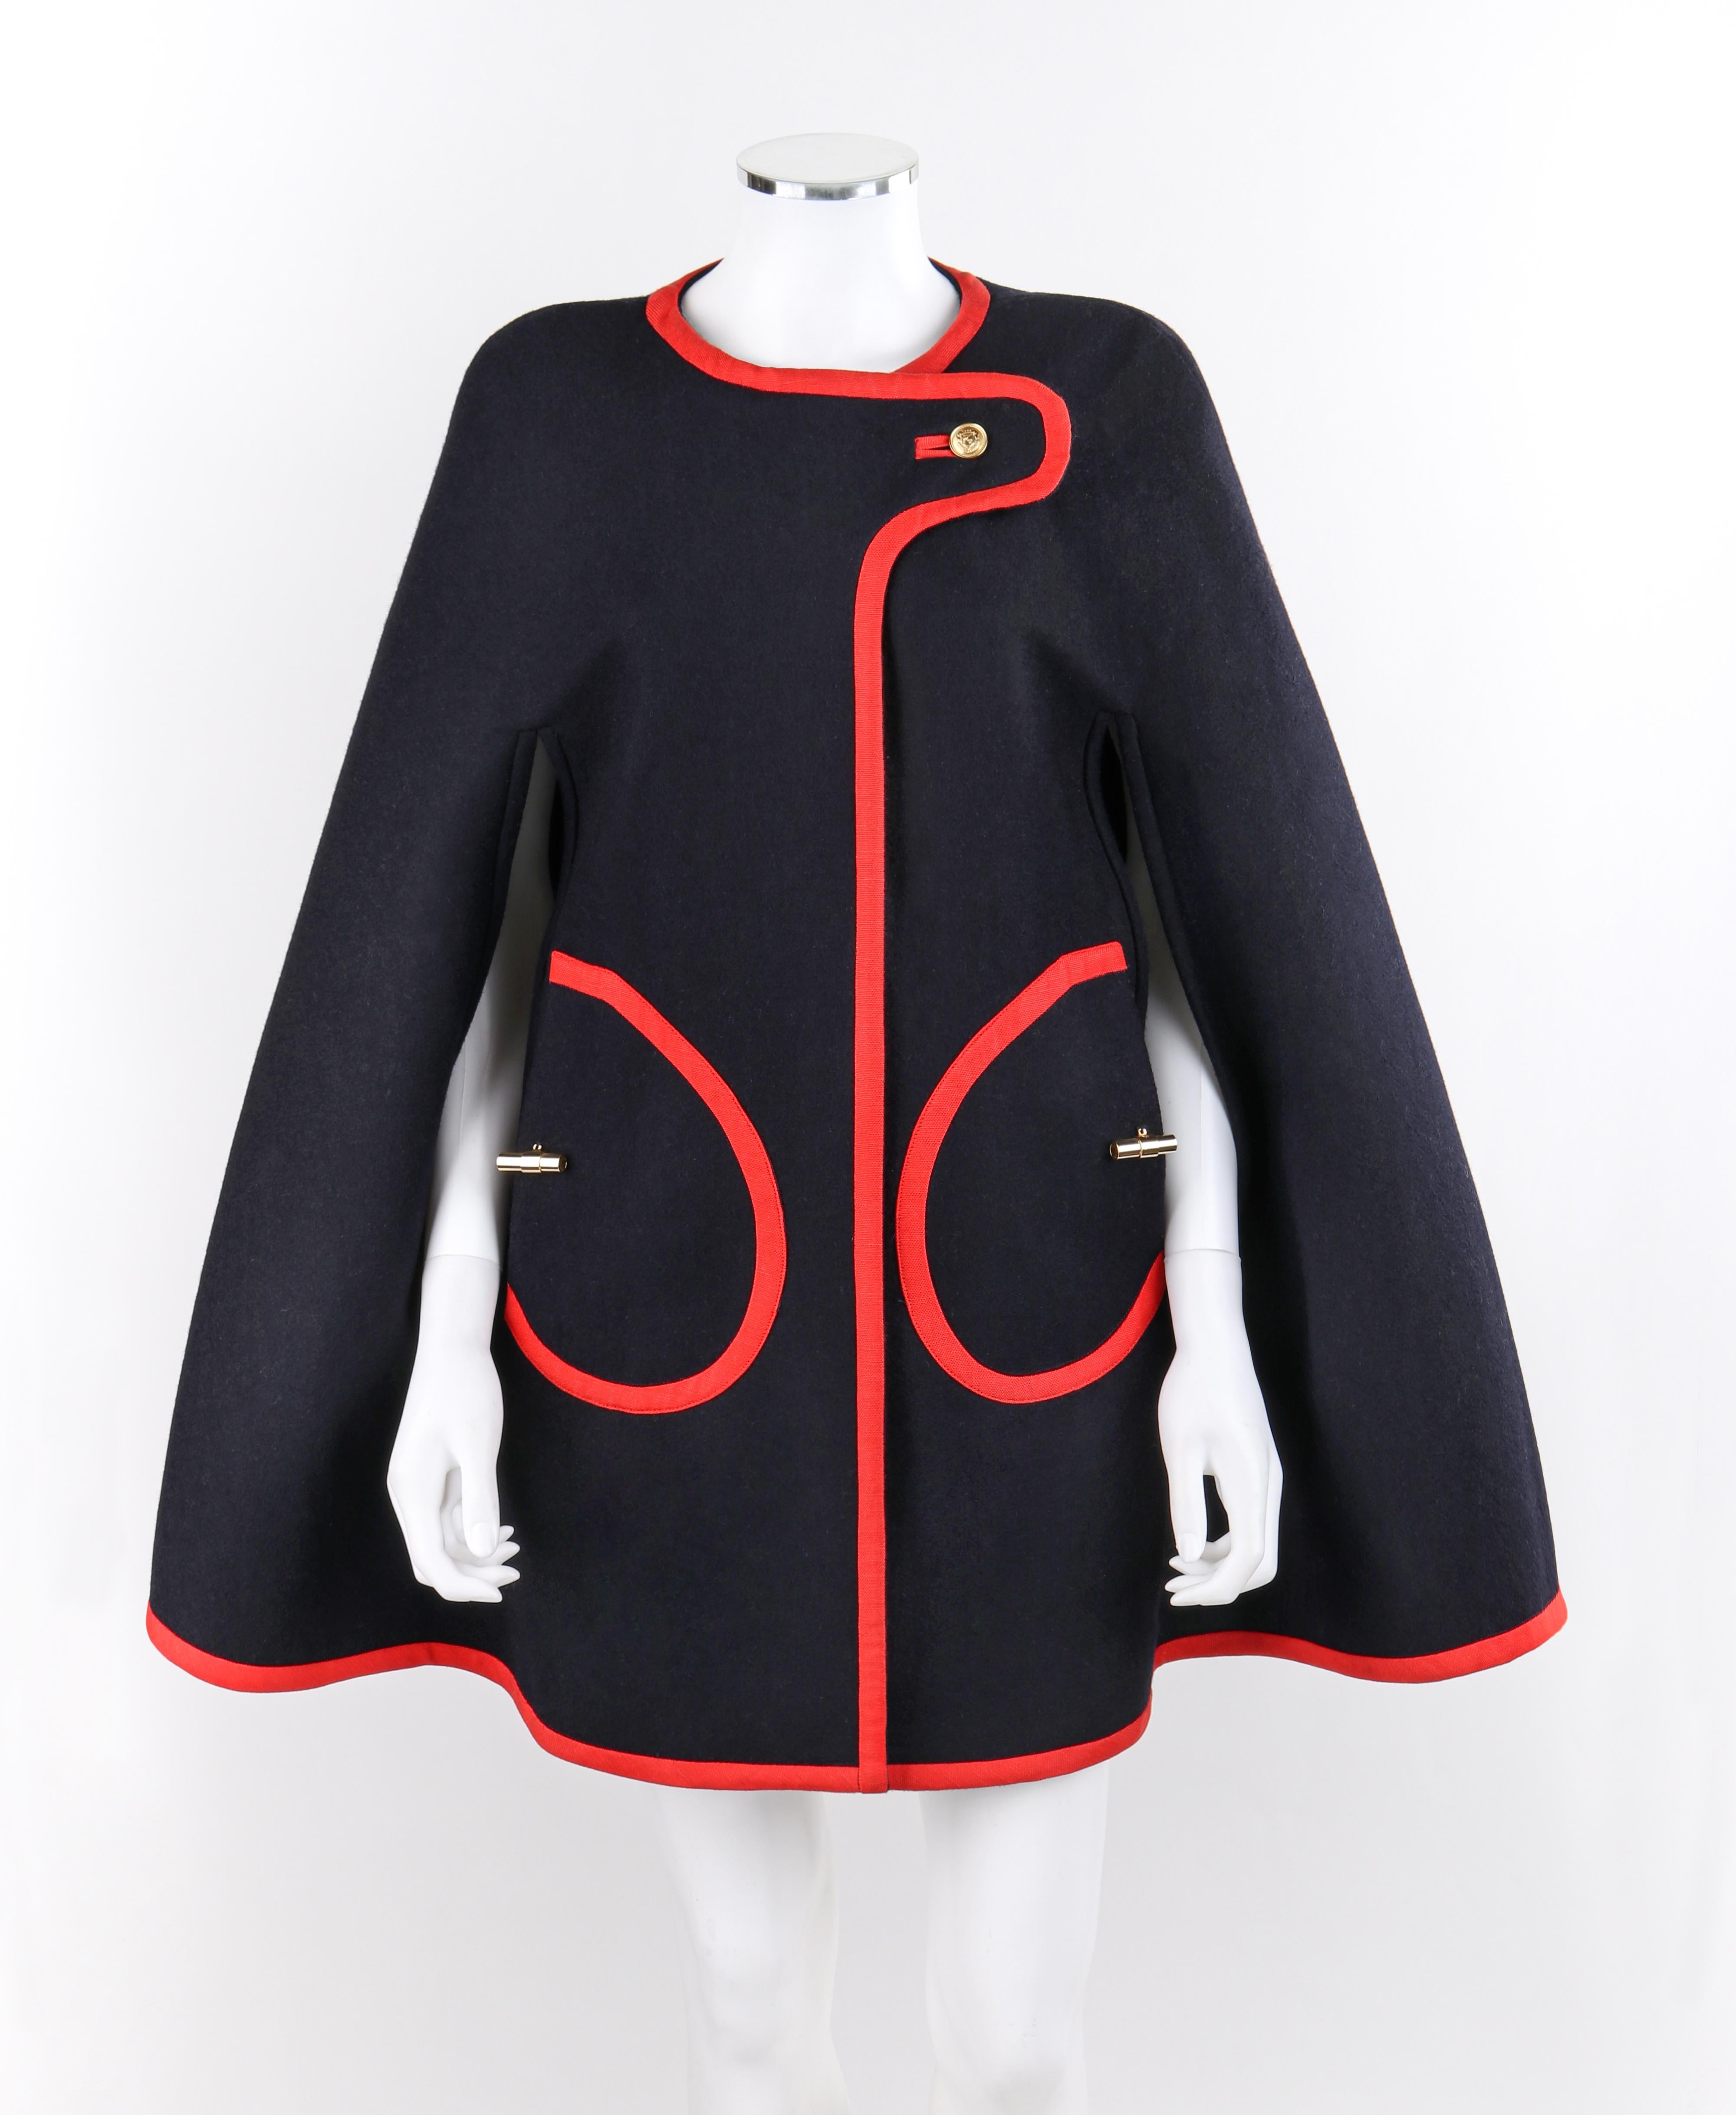 LAUREN MOFFATT F/W 2010 “Cadet” 1960's Navy Blue Red Military Cape Mantel Coat
  
Brand / Manufacturer: Lauren Moffatt
Collection: F/W 2010
Manufacturer Style Name: “Cadet Cape”  
Style: Cape coat
Color(s): Navy blue, red
Lined: Yes
Marked Fabric